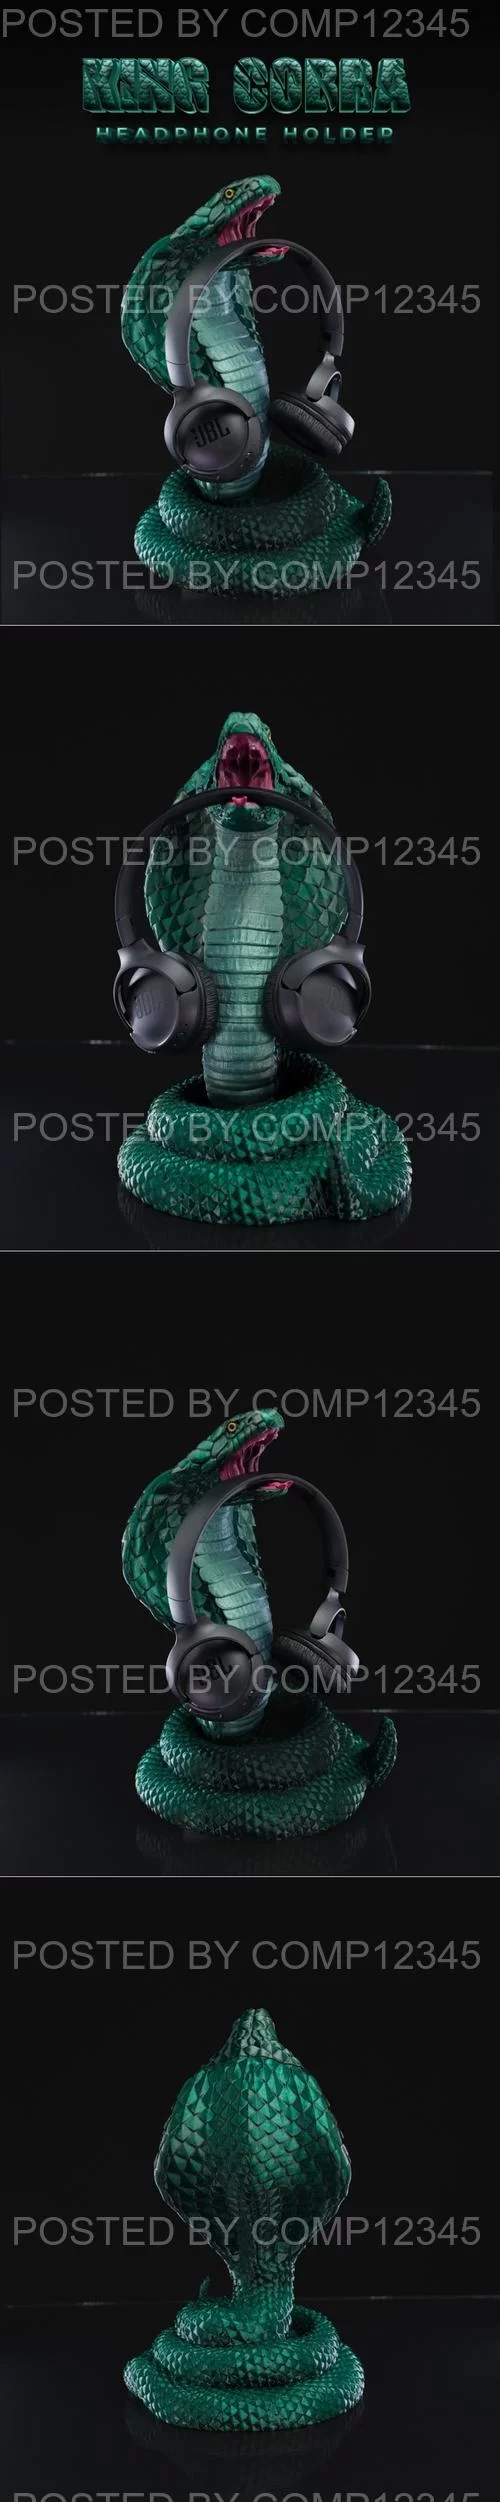 King Cobra Headphone Holder 3D Print